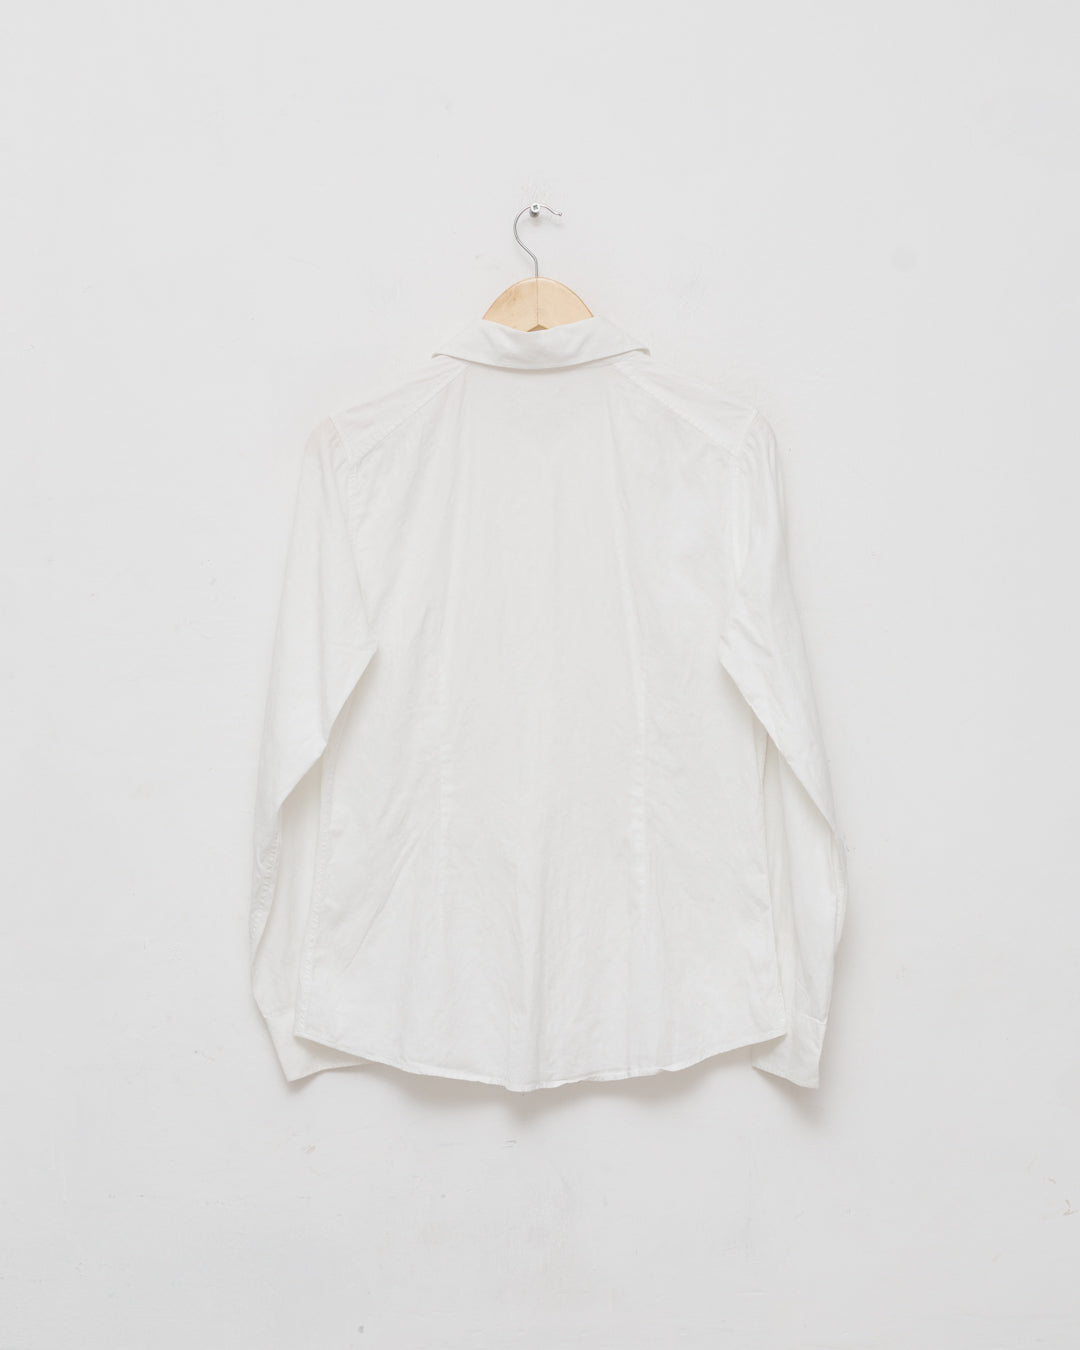 Etro Minimalist White Shirt